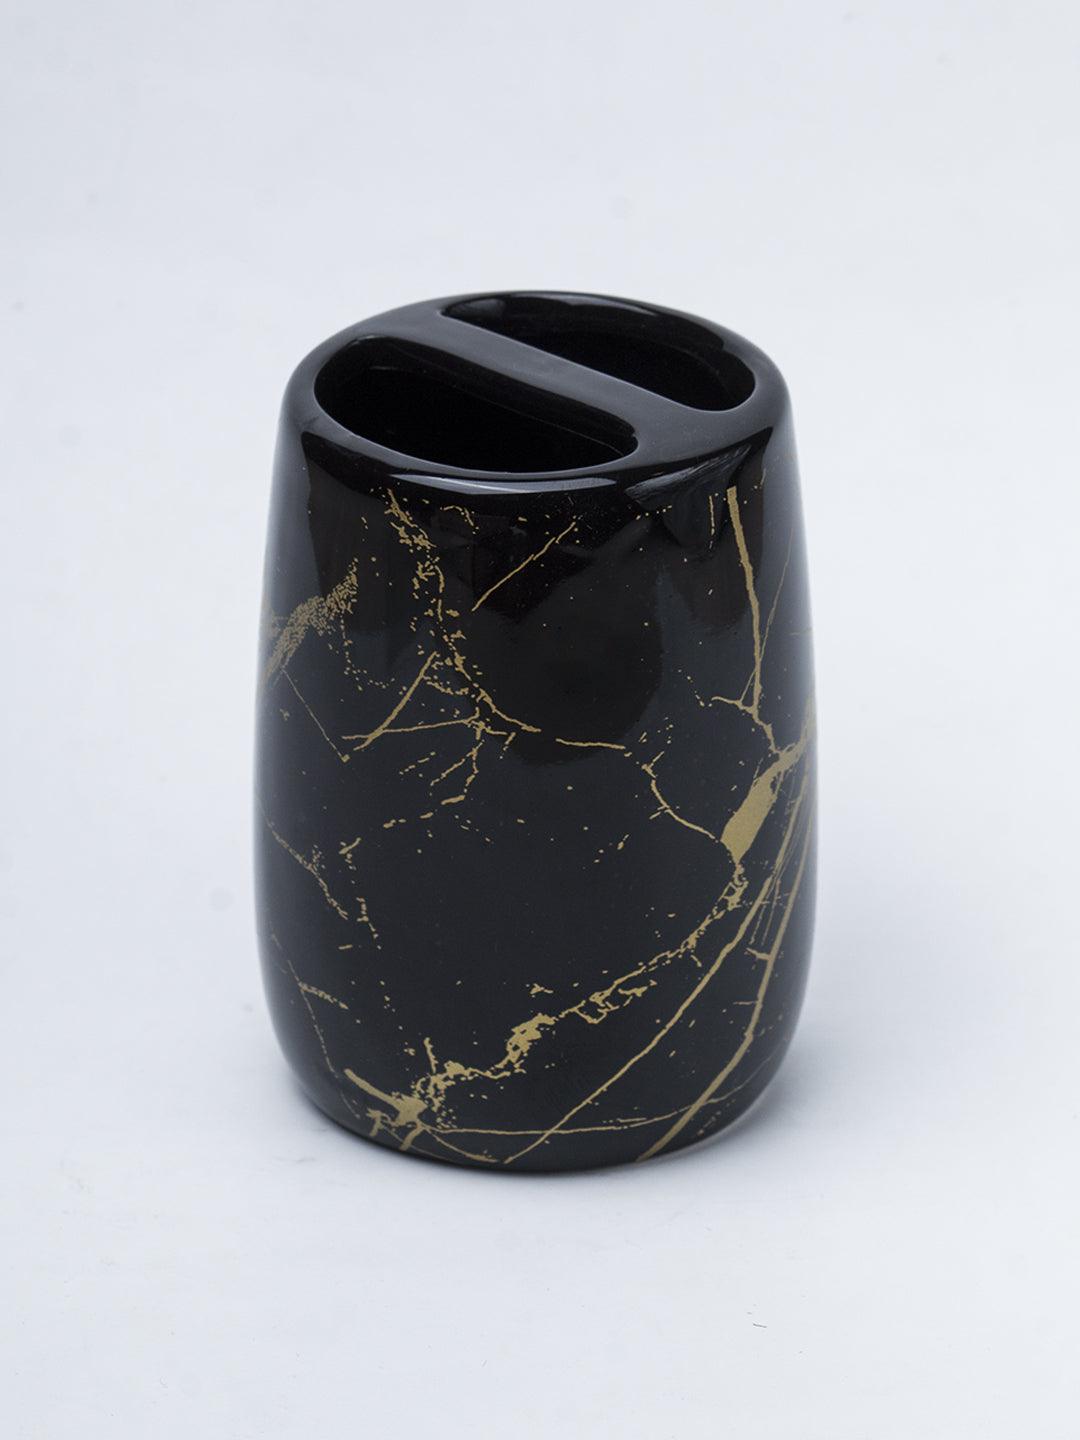 Black Ceramic Bathroom Set Of 4 - Stone Finish, Bath Accessories - 4